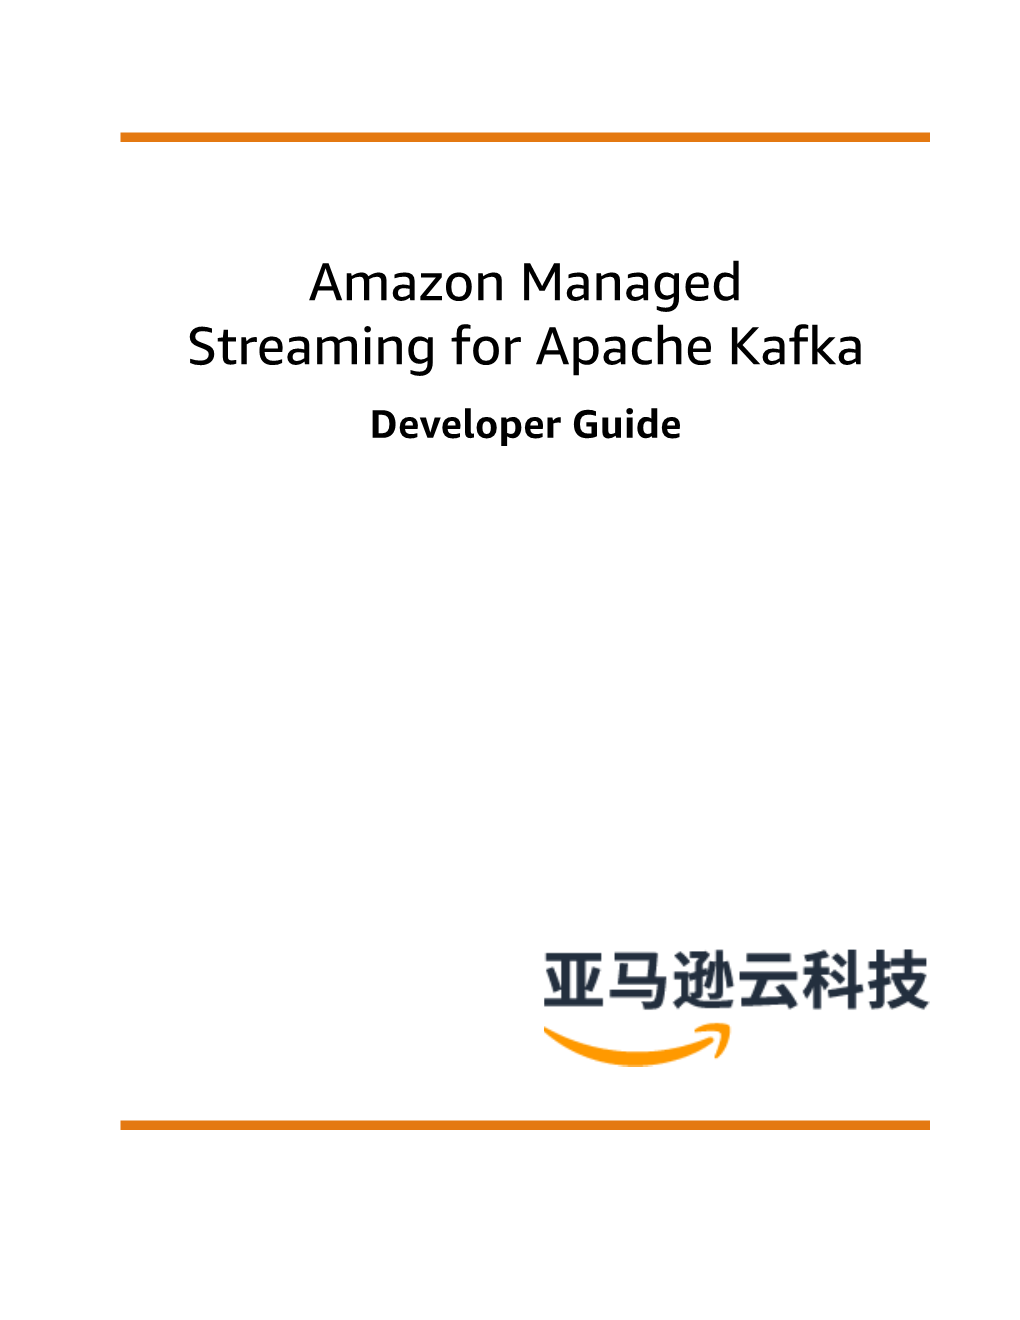 Amazon Managed Streaming for Apache Kafka Developer Guide Amazon Managed Streaming for Apache Kafka Developer Guide